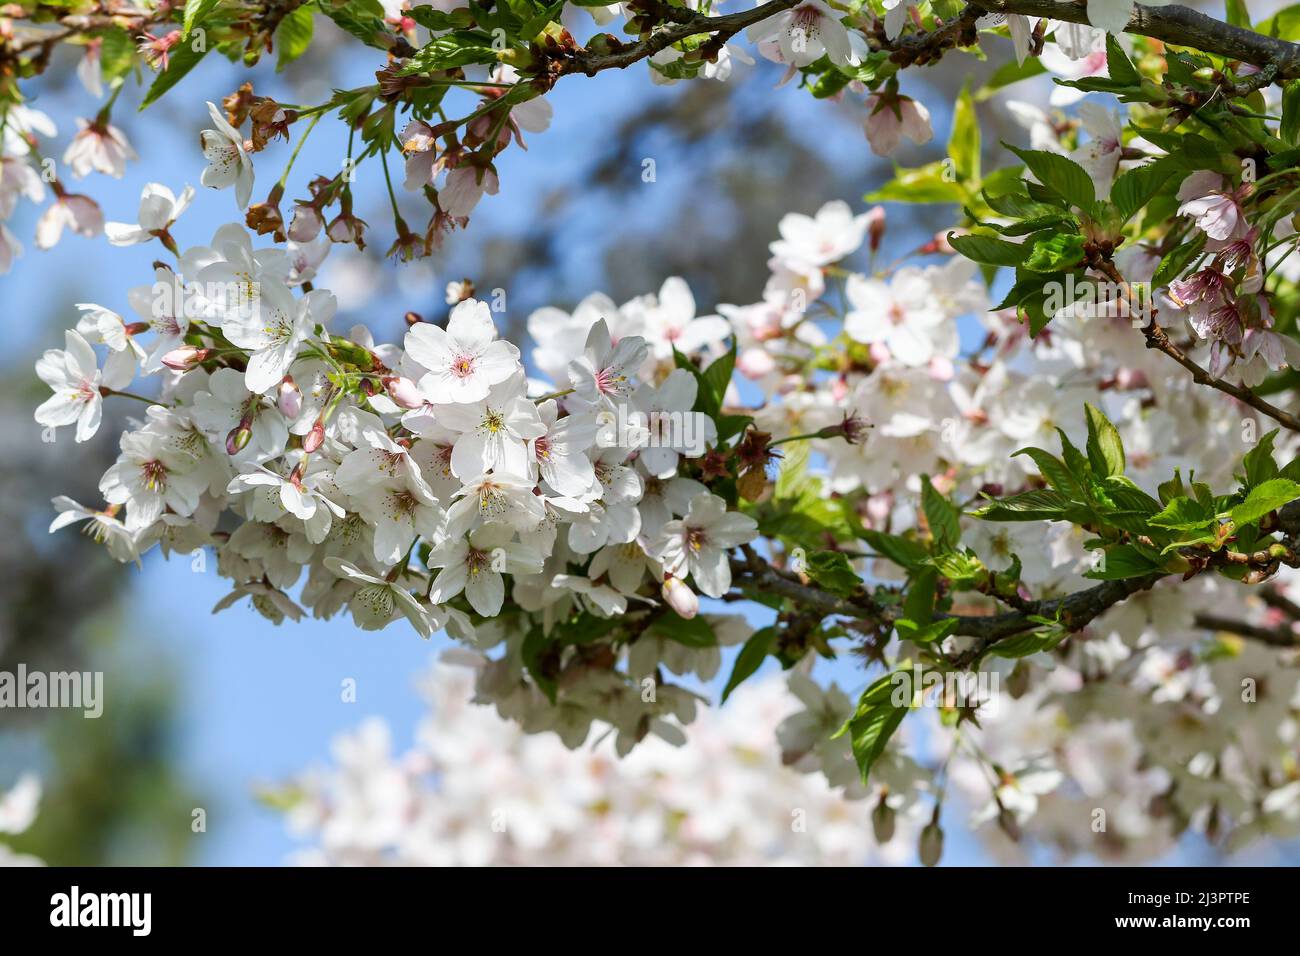 Spreading Plum tree (Prunus divaricata), pretty white flower blossoms blooming on branch in Spring. Dublin, Ireland Stock Photo